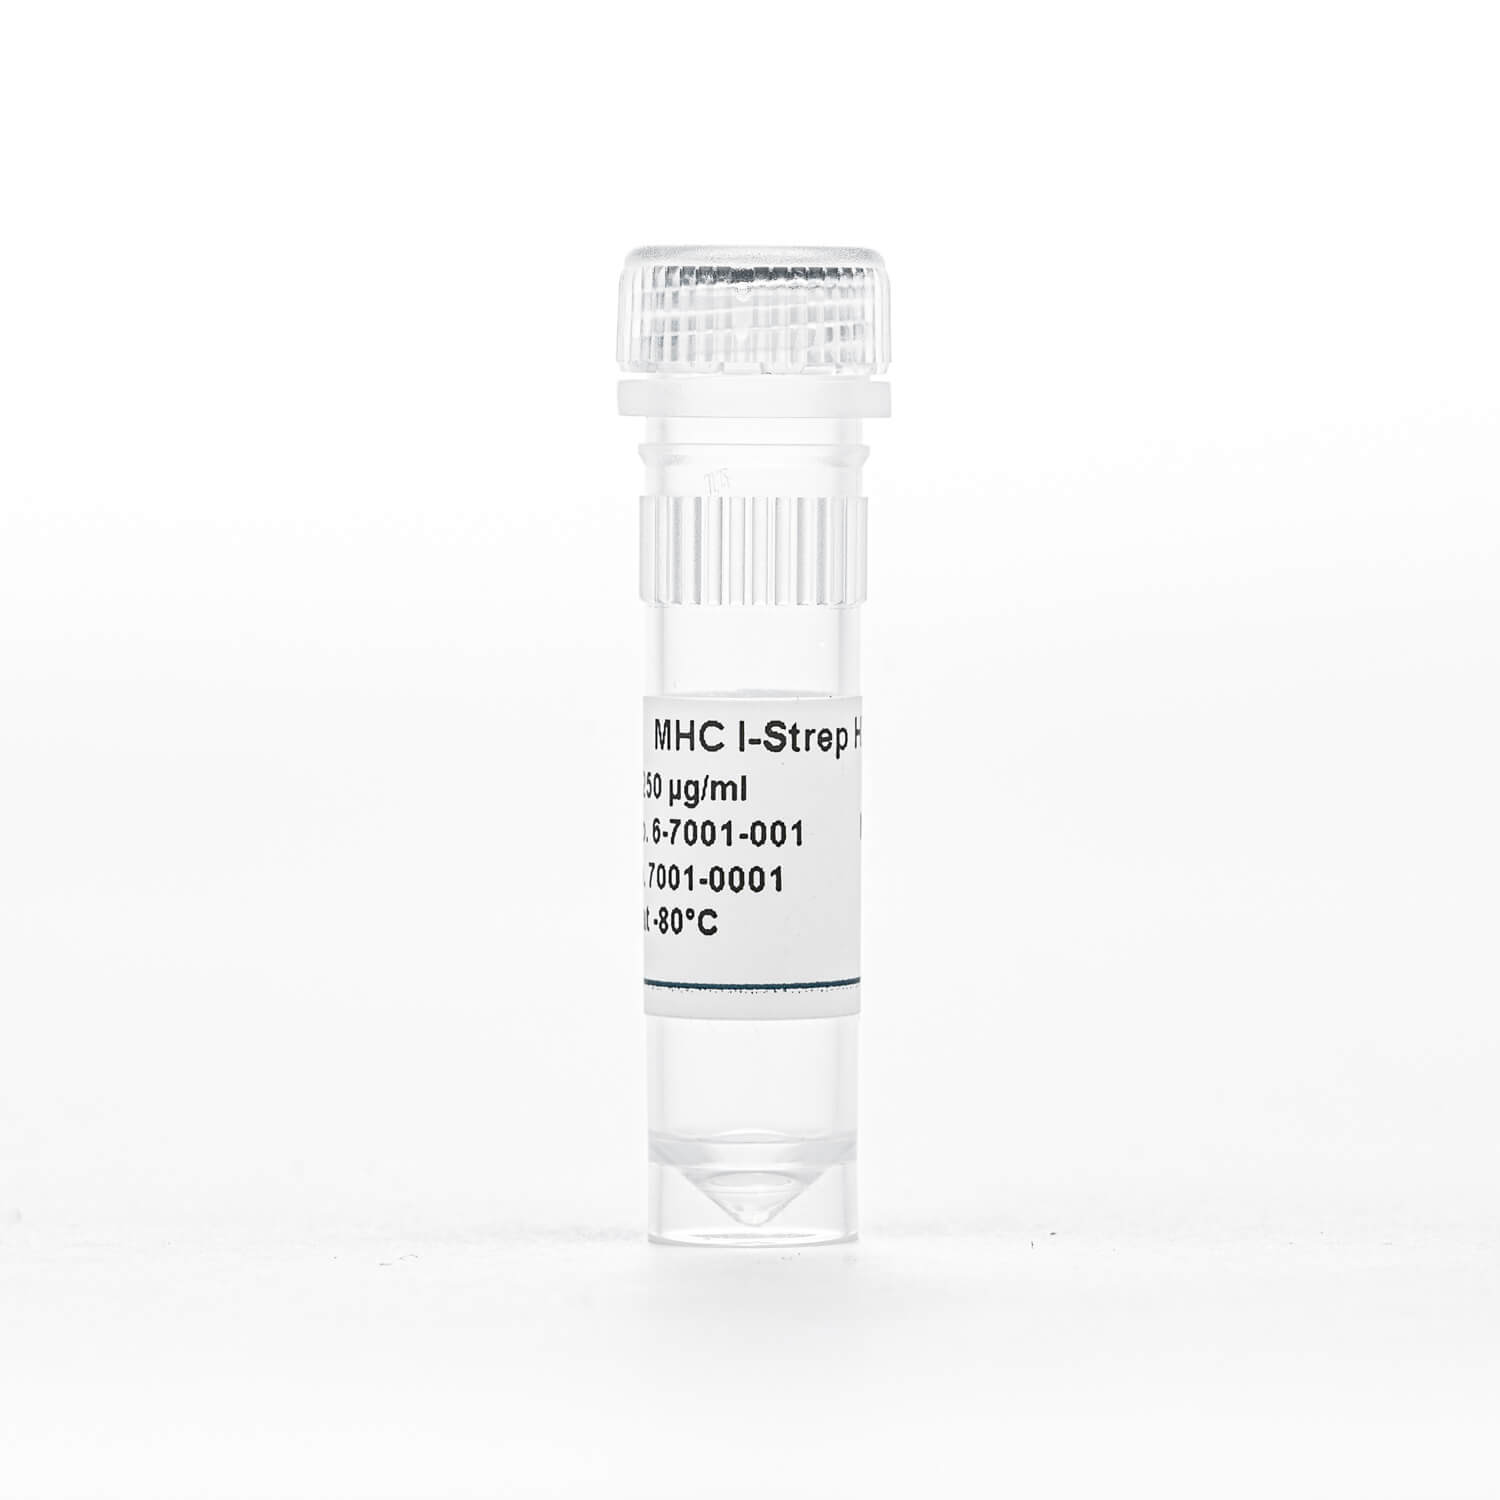 MHC I-Strep H-2 Kb; Ovalbumin (SIINFEKL)